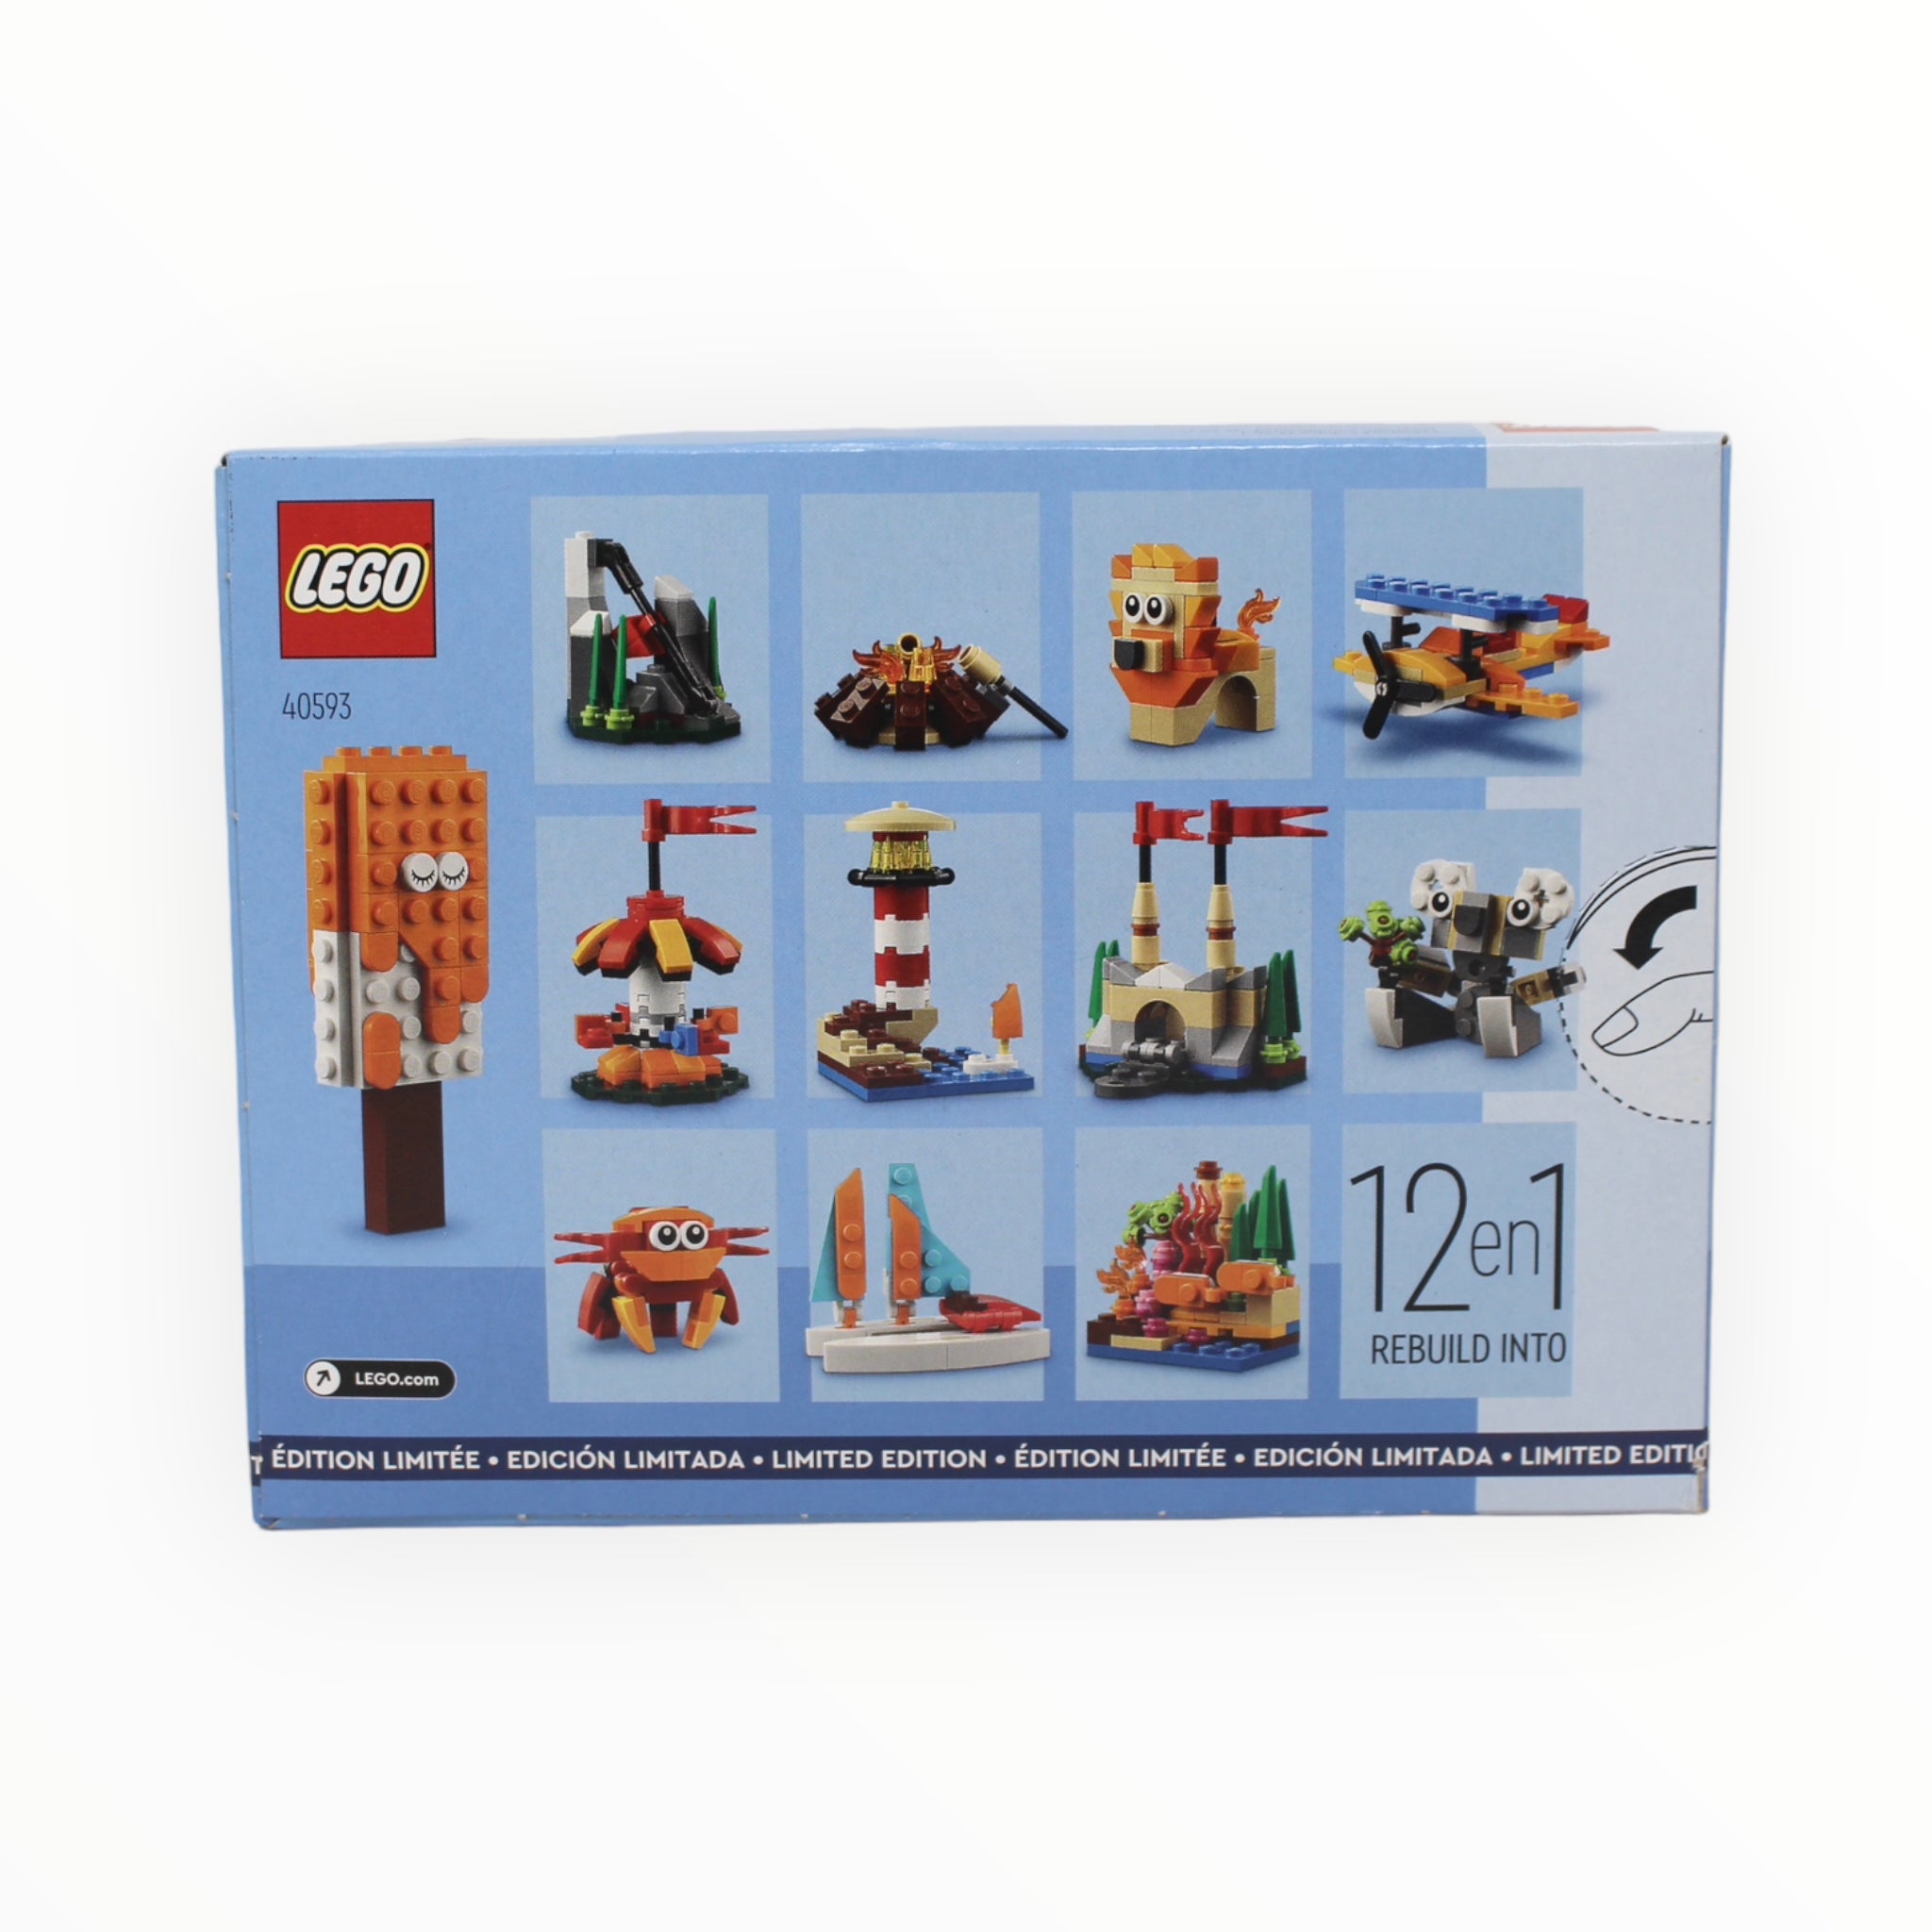 Retired Set 40593 LEGO Fun Creativity 12-in-1